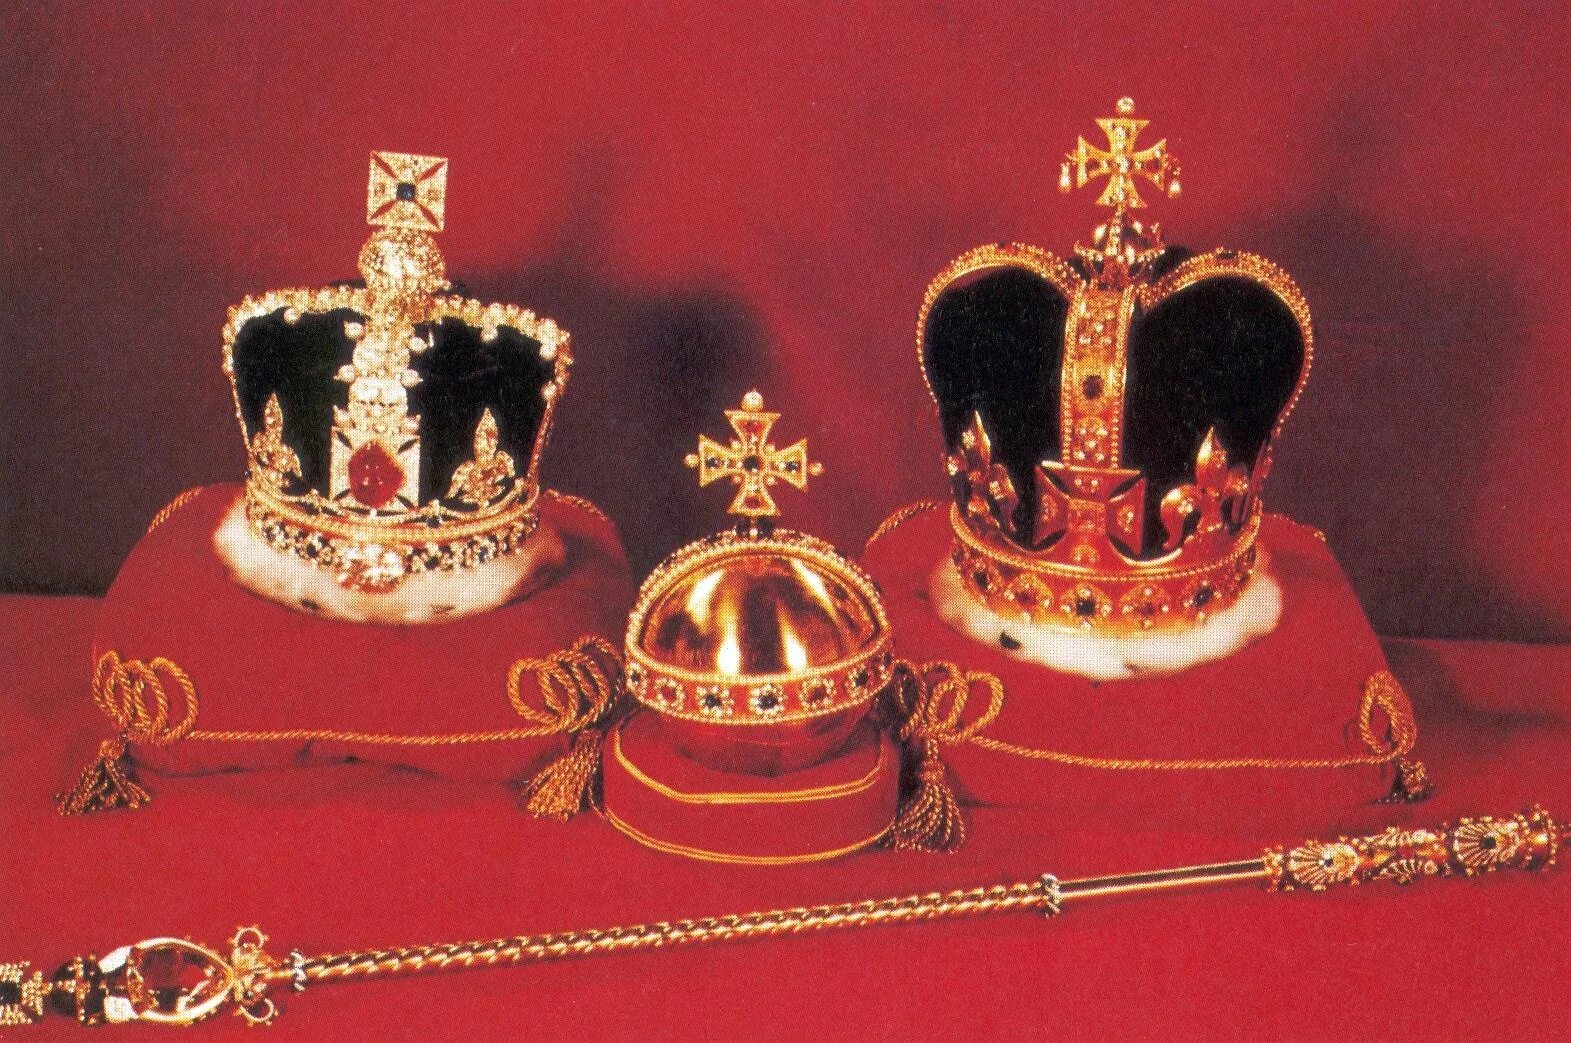 Титул монарха главы государства. Абсолютная монархия корона. Абсолютная монархия в Англии. Абсолютизм и абсолютная монархия. Корона Великобритания монархия.